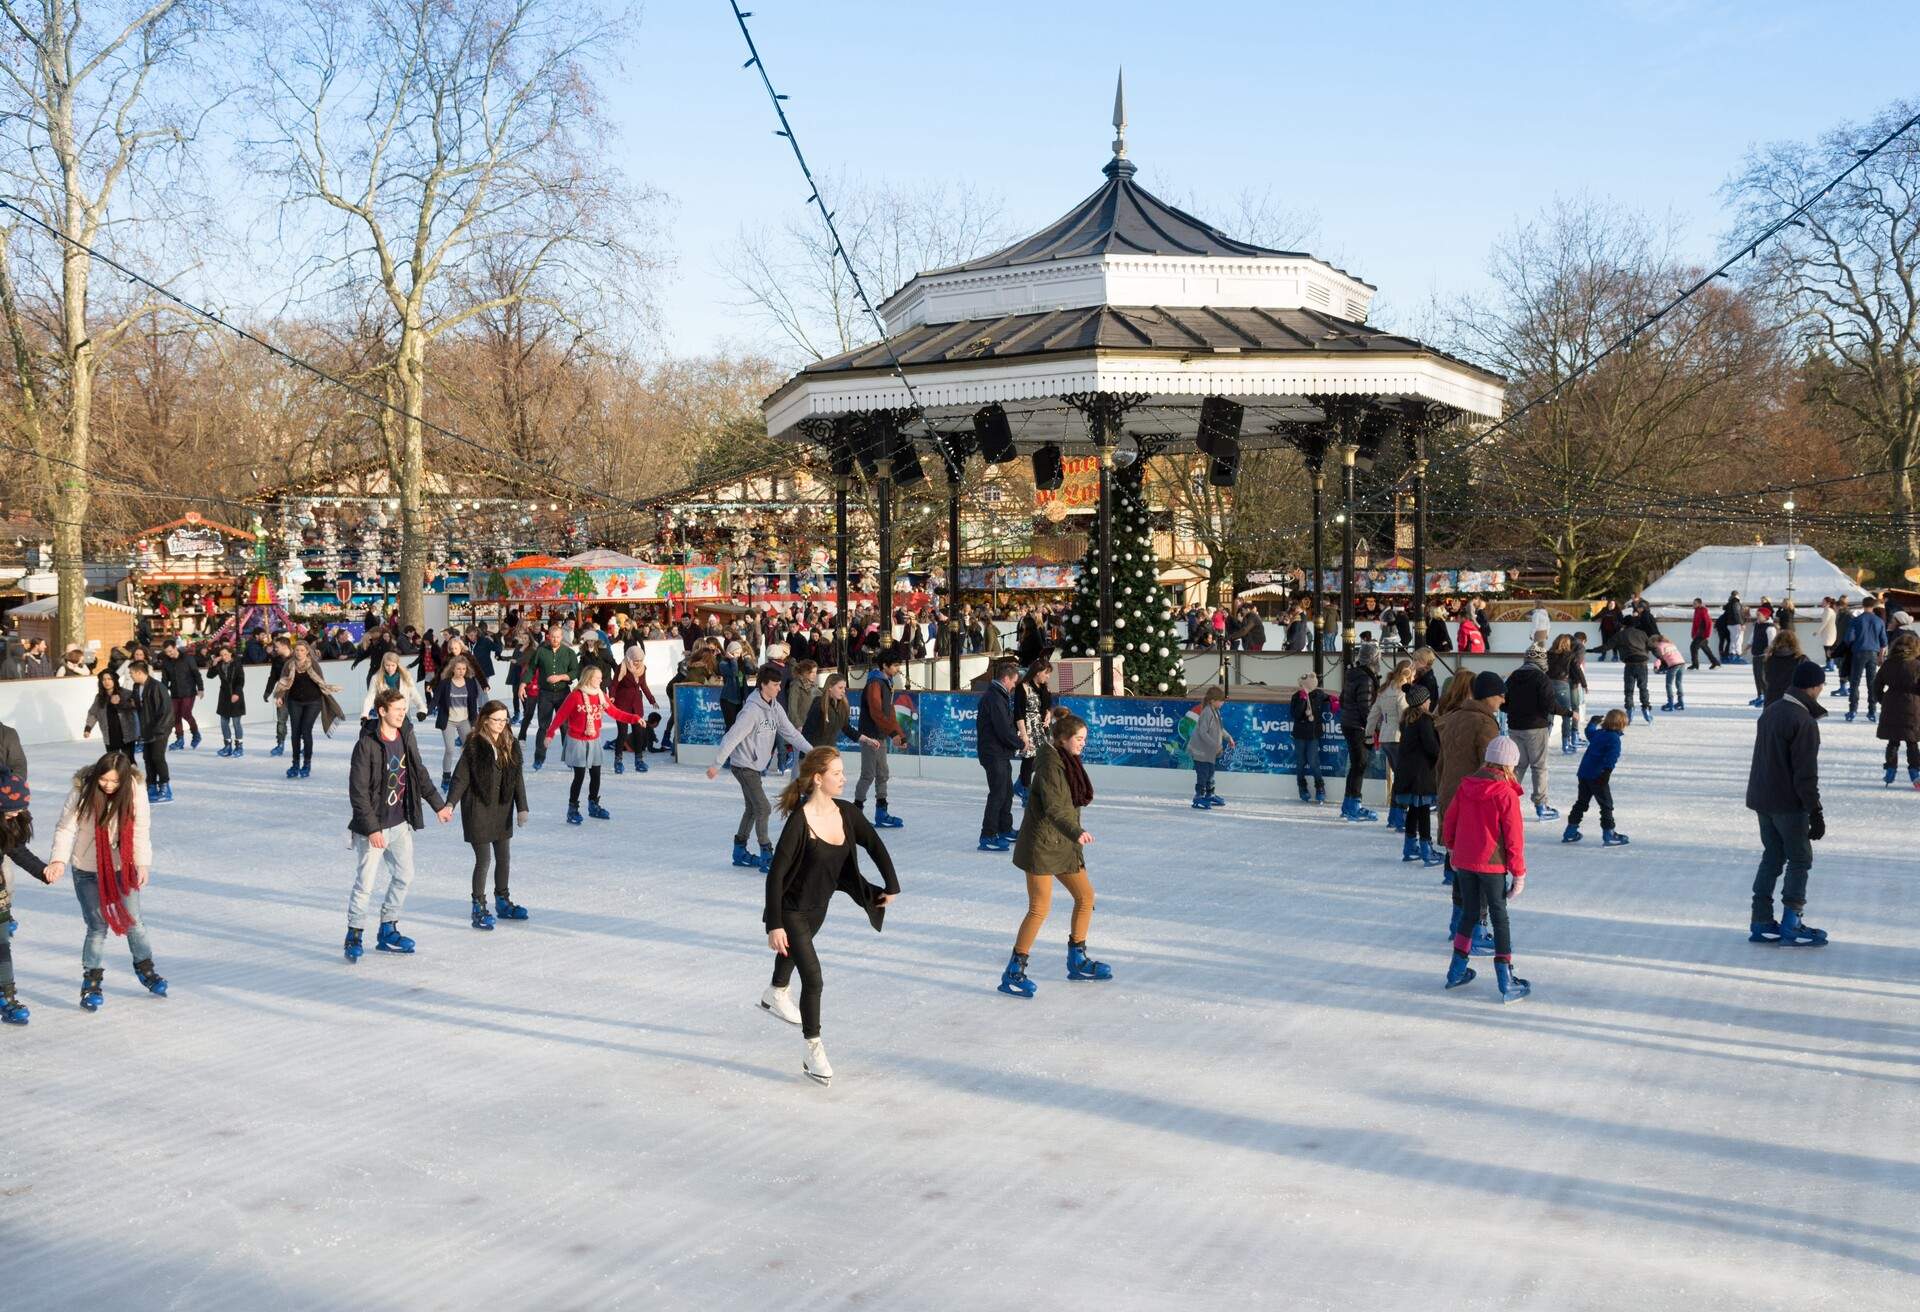 Winter Wonderland ice rink in Hyde Park, London, UK